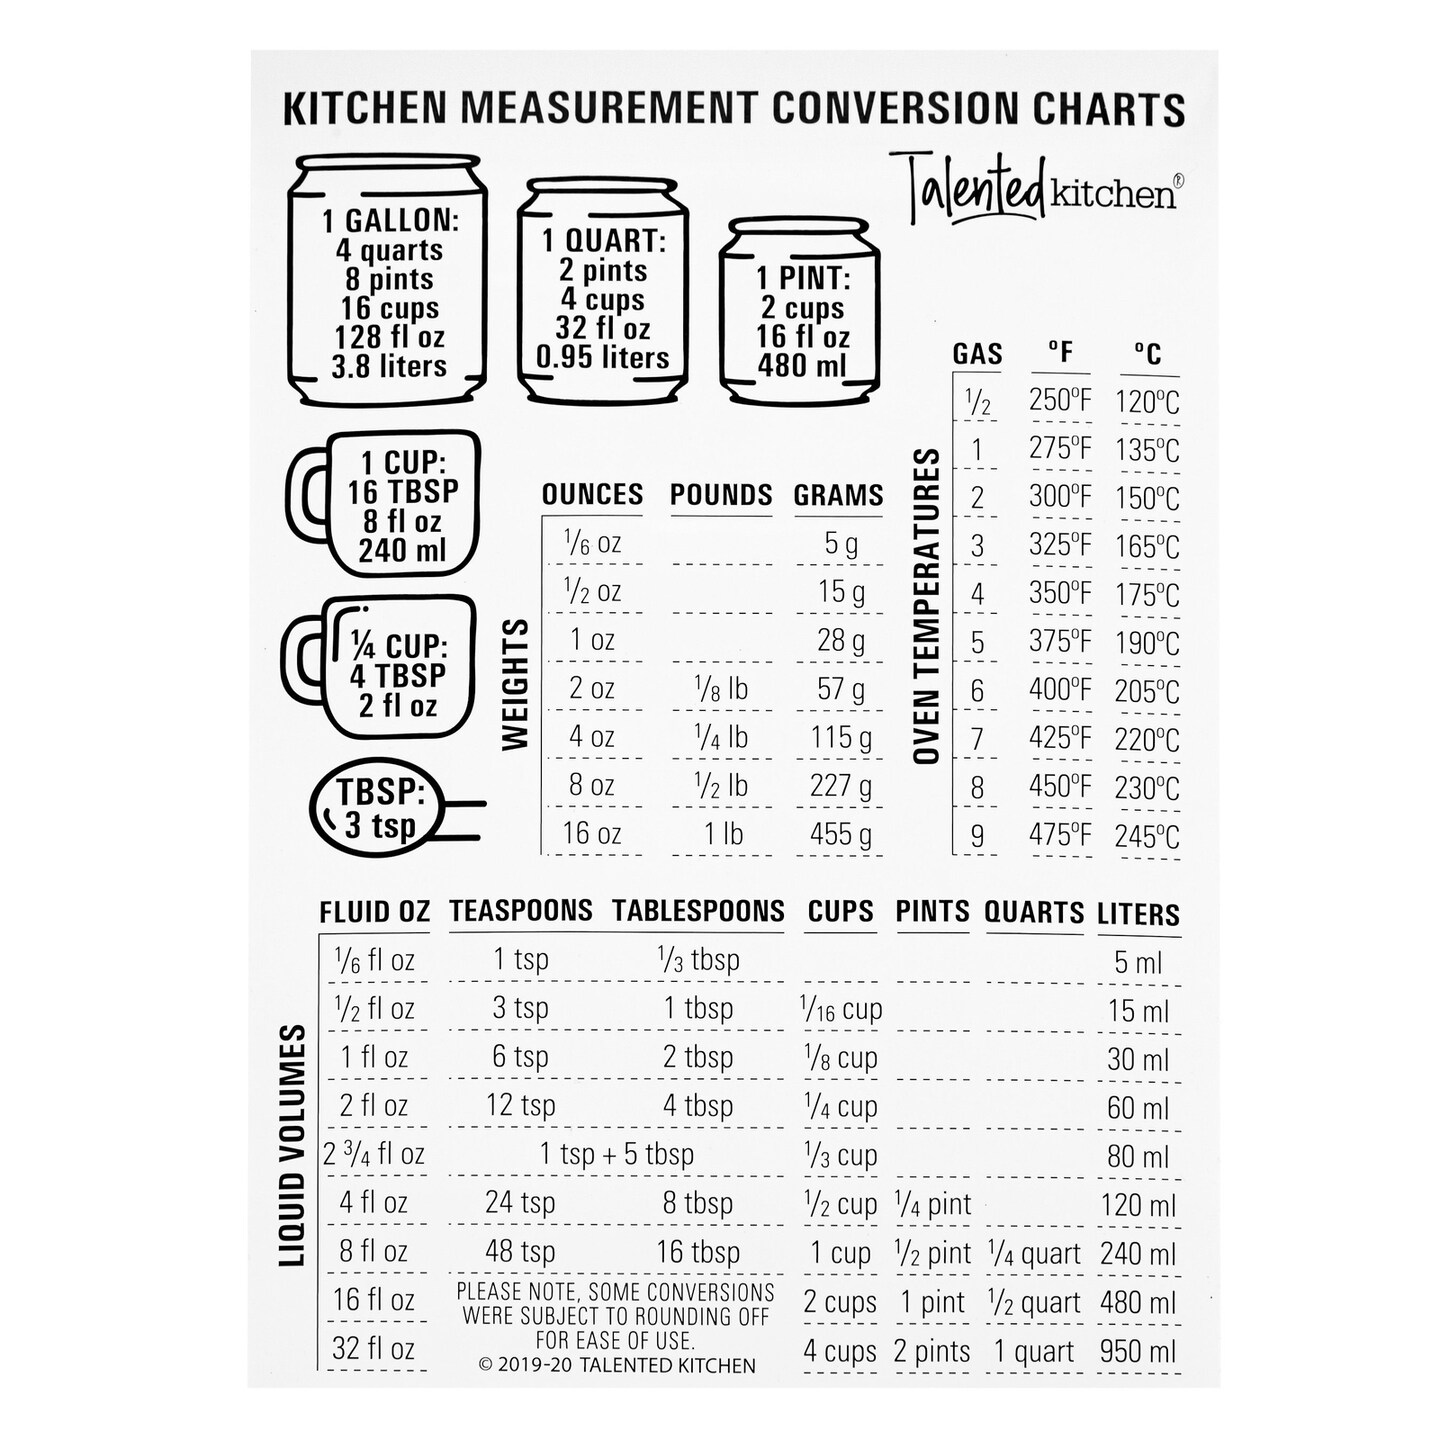 weight conversion chart